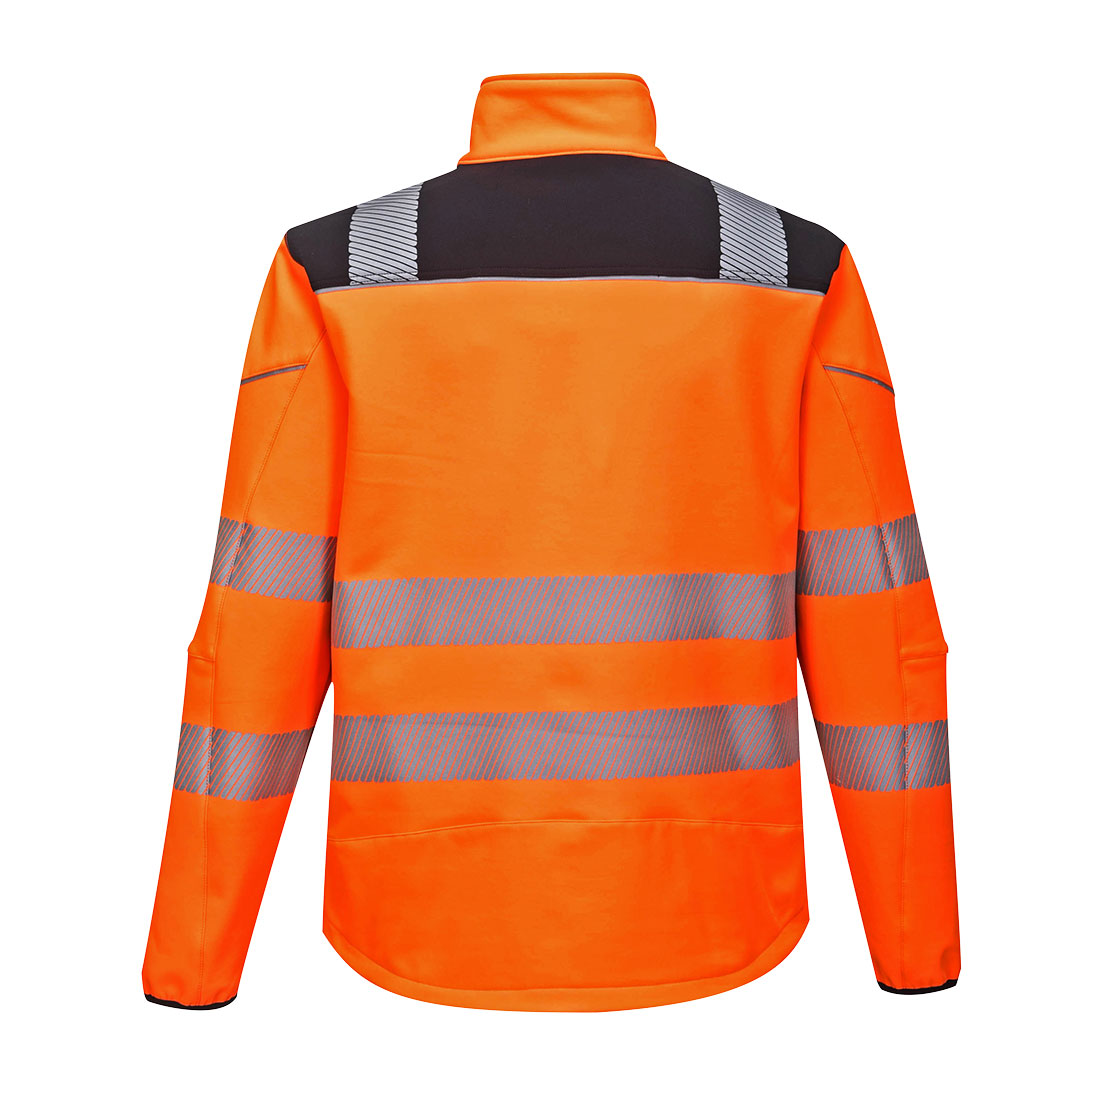 PORTWEST PW3 Hi Vis Softshell Jacket Windproof Water Resistant Work Wear T402 